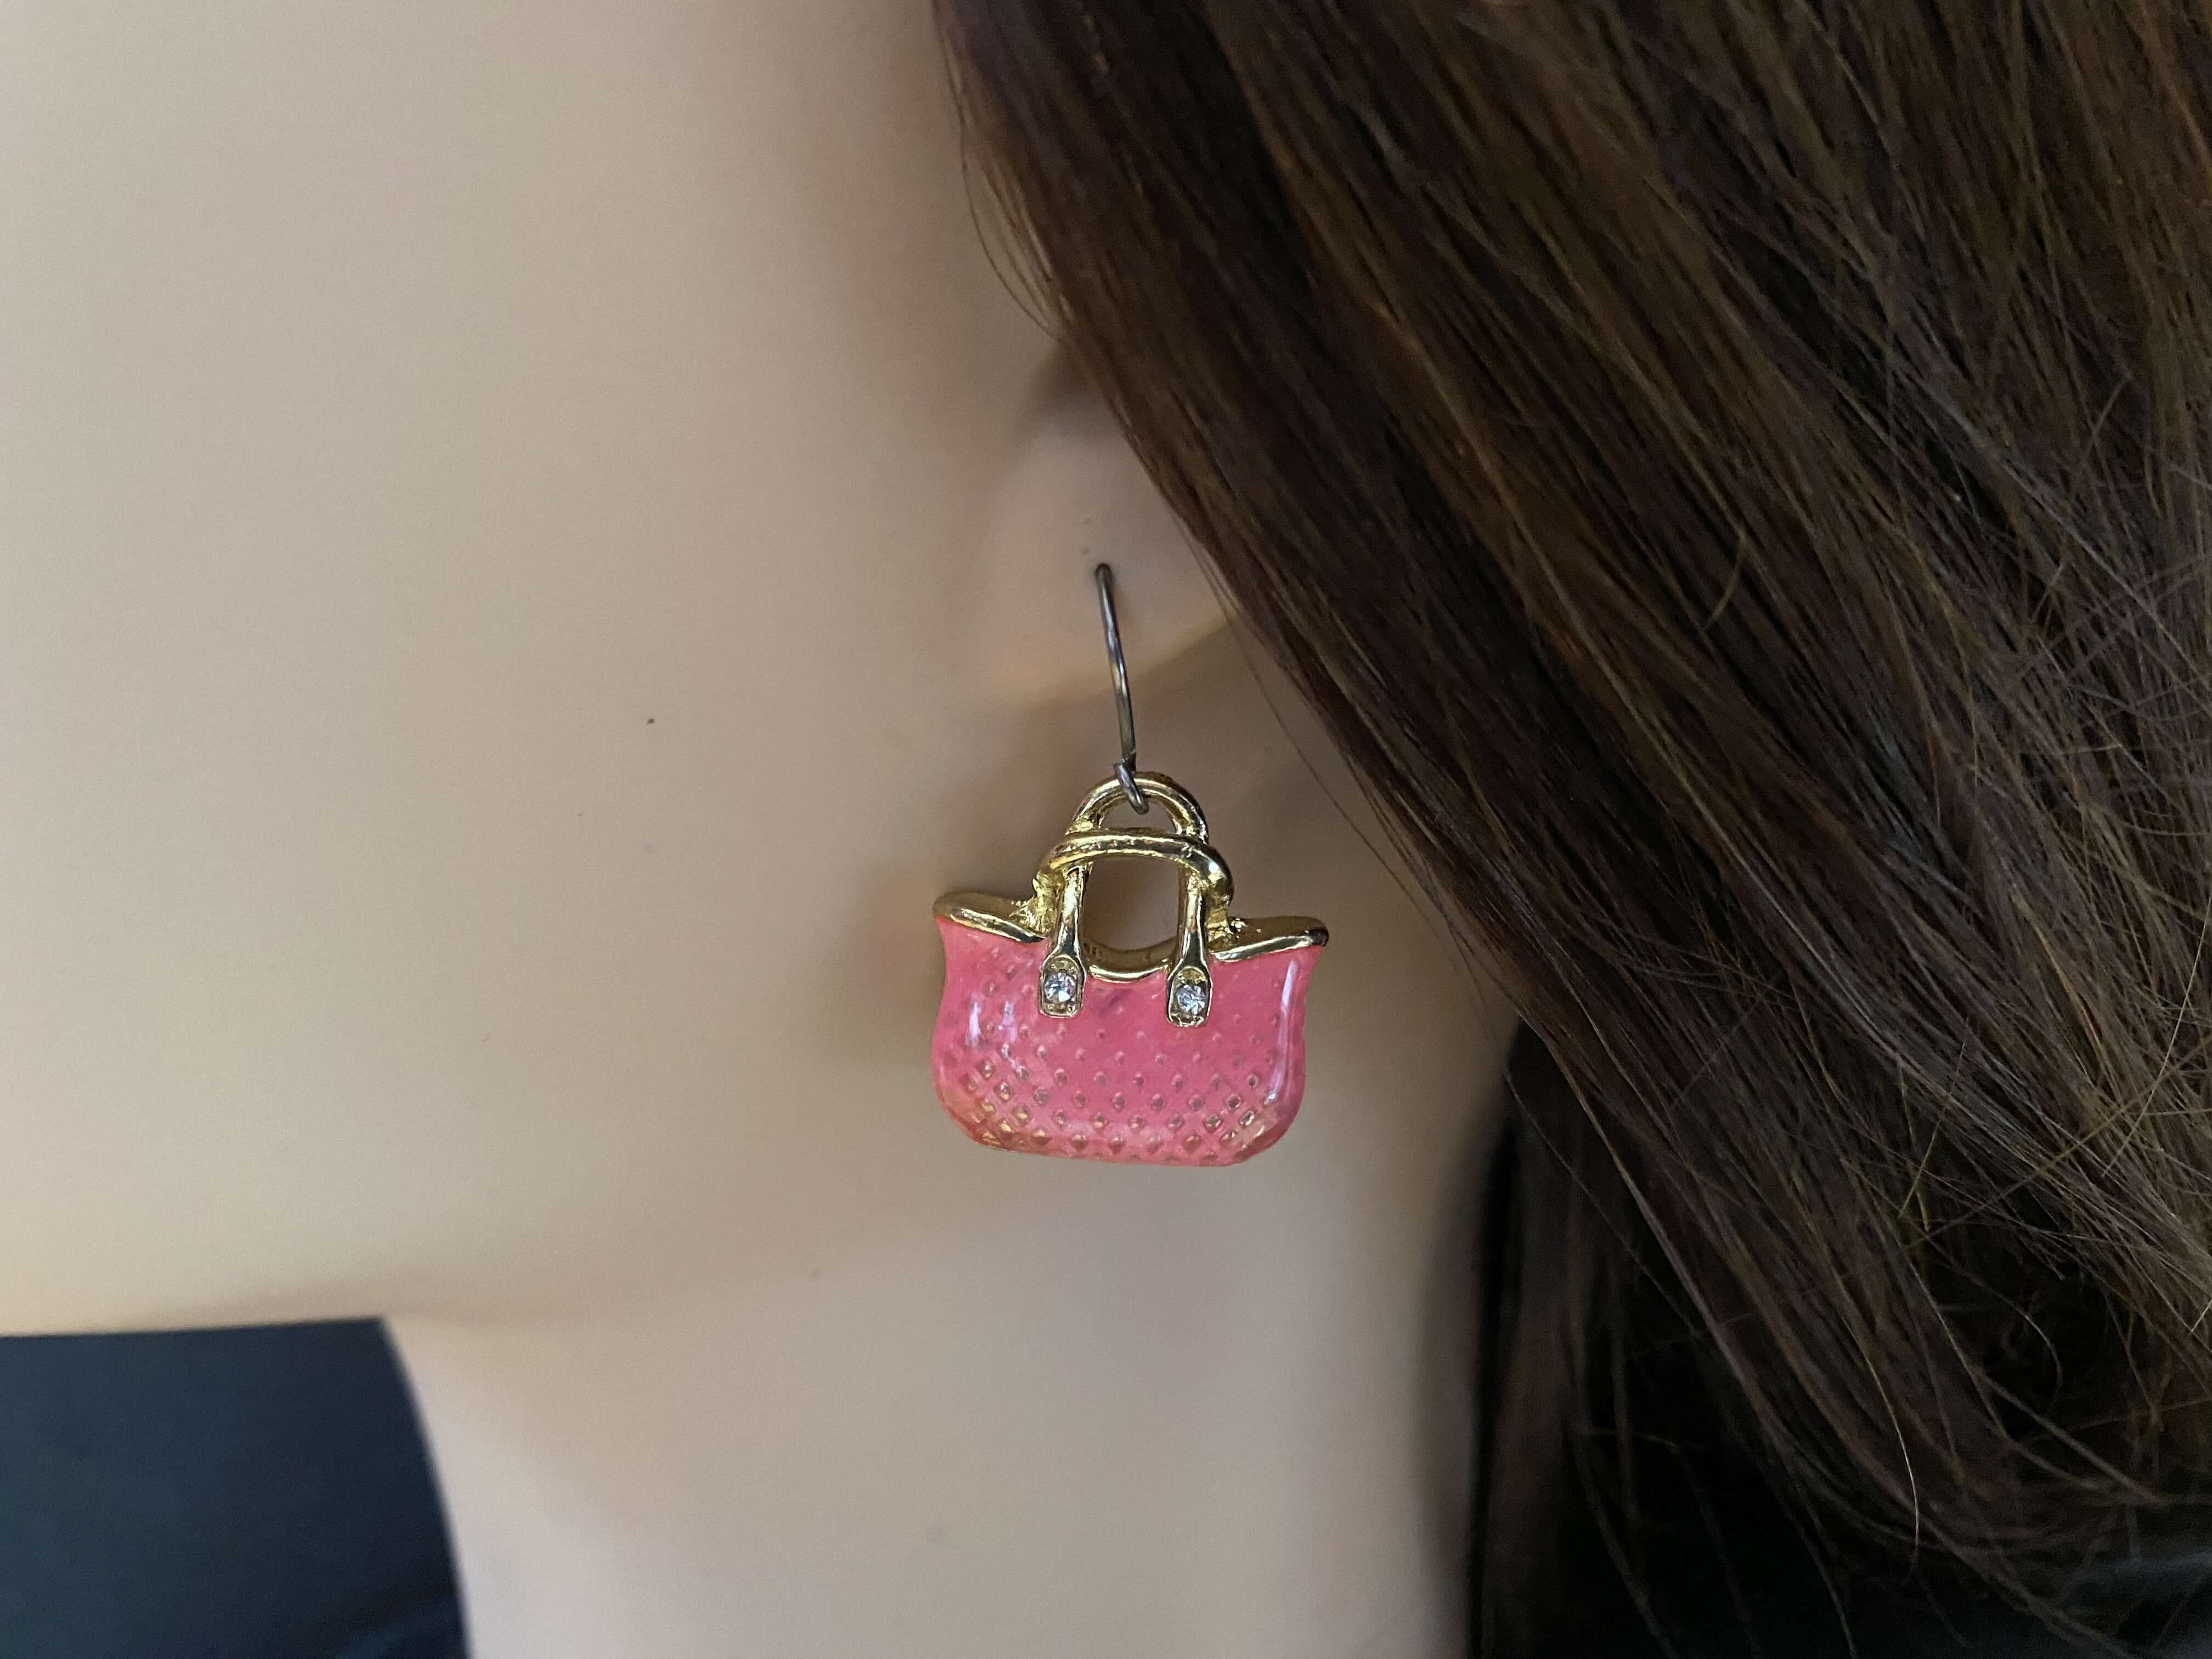 Handbag Charm pink on ear